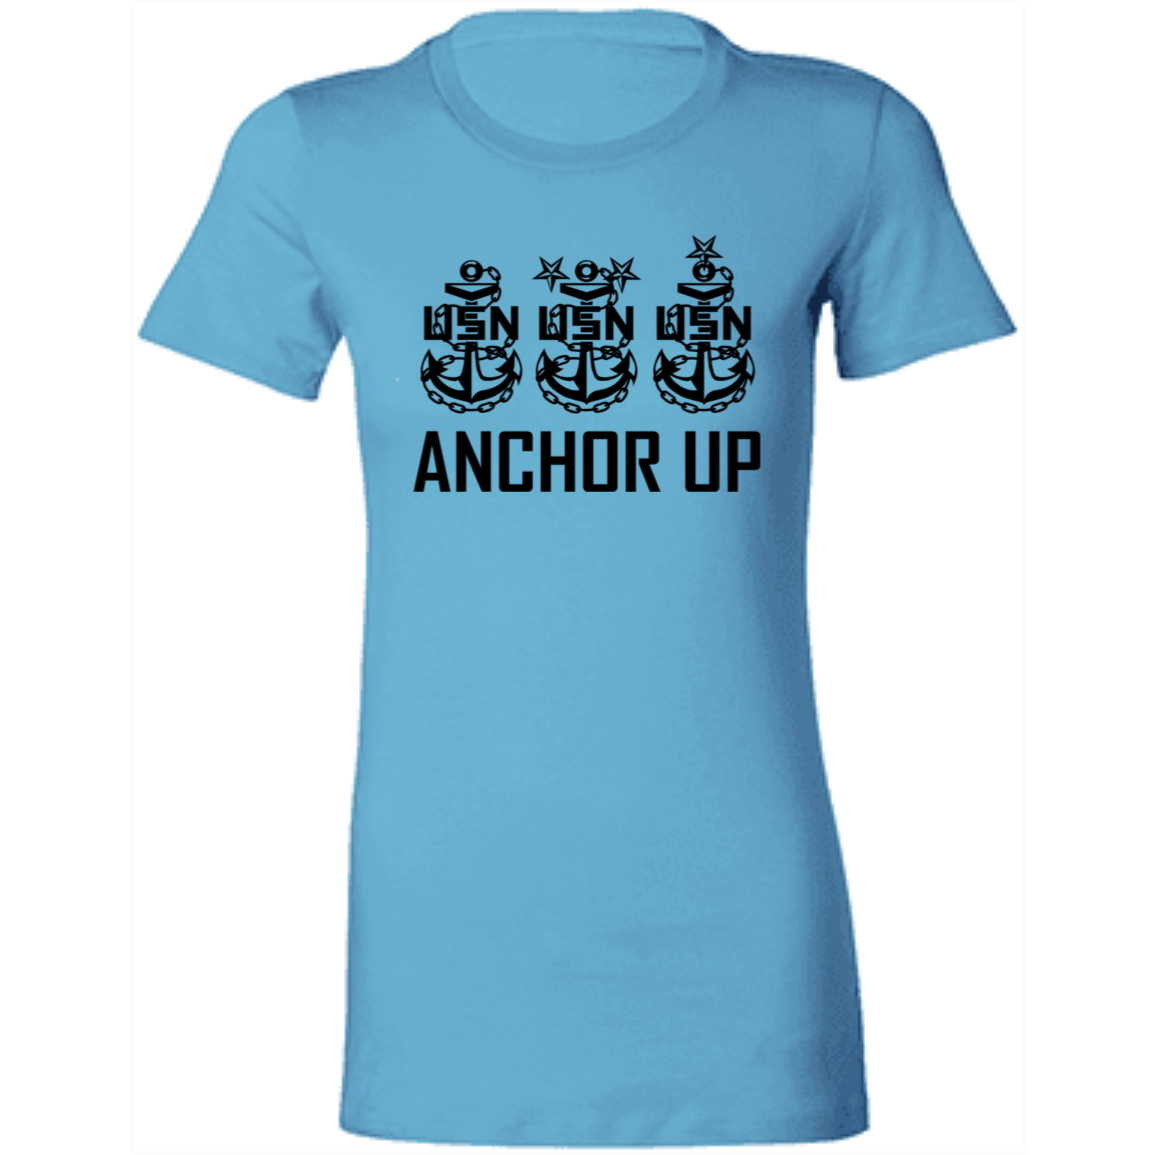 Anchor Up  Ladies' Favorite T-Shirt